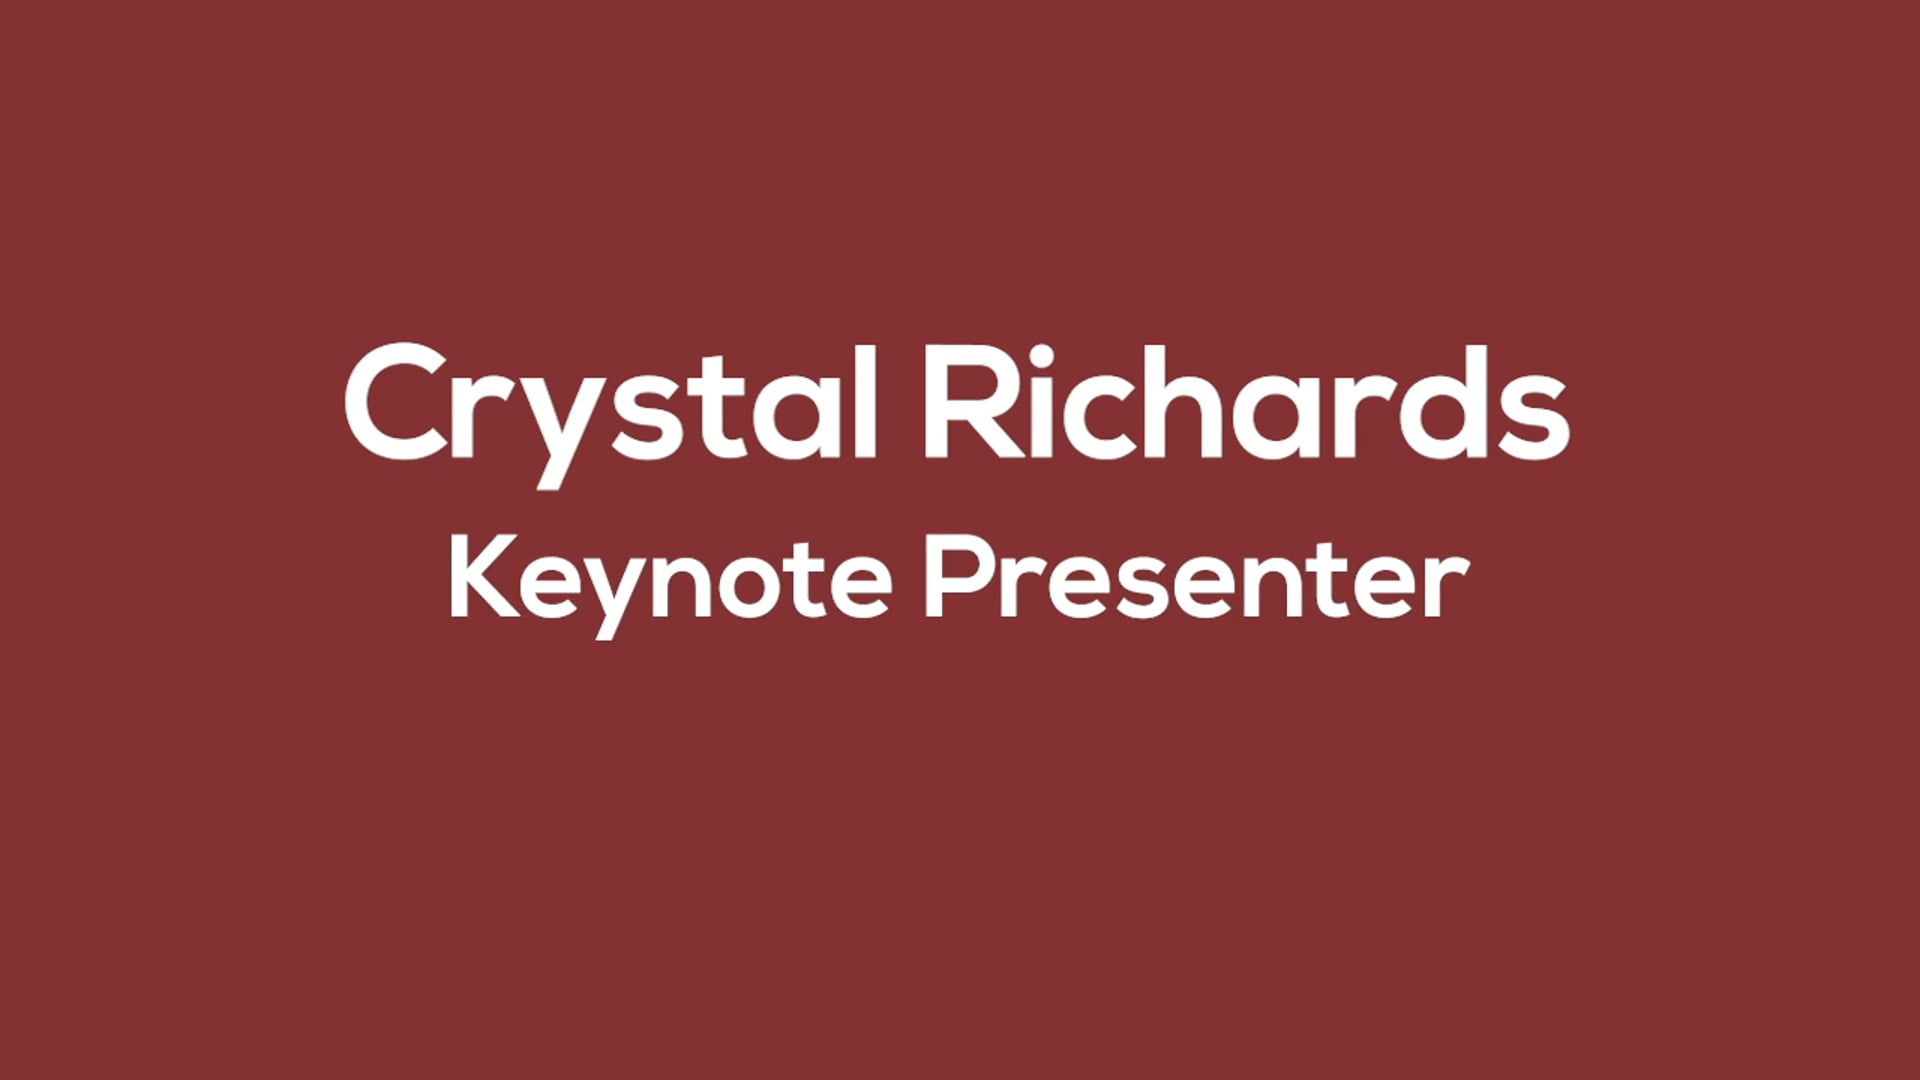 Crystal Richards - Keynote Presenter